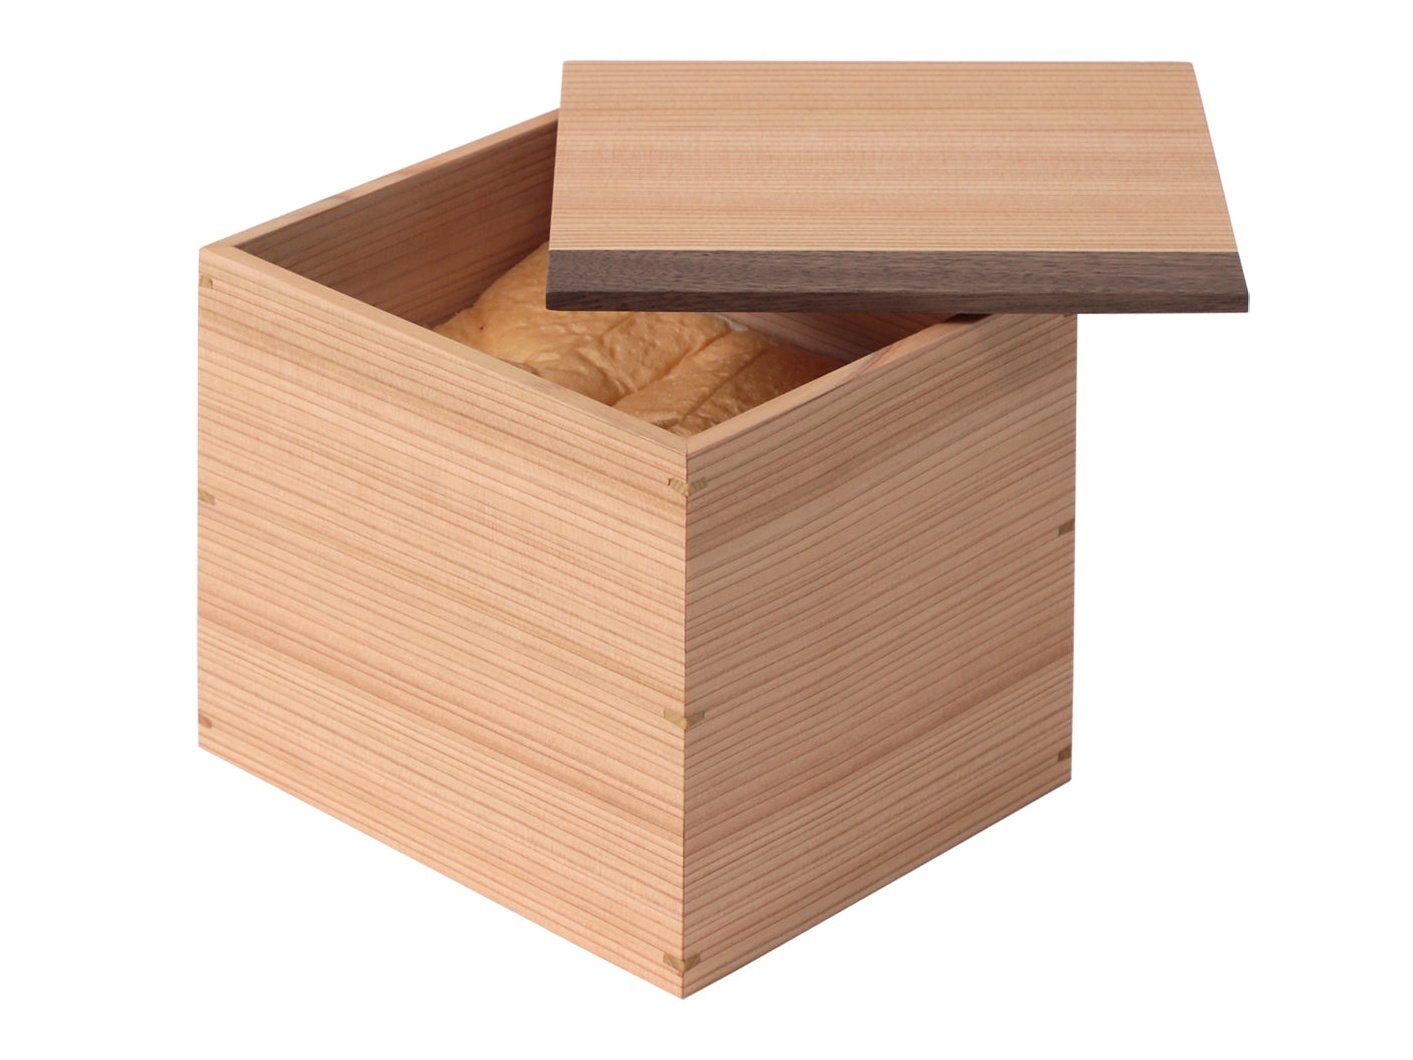 Ambai Bread Box